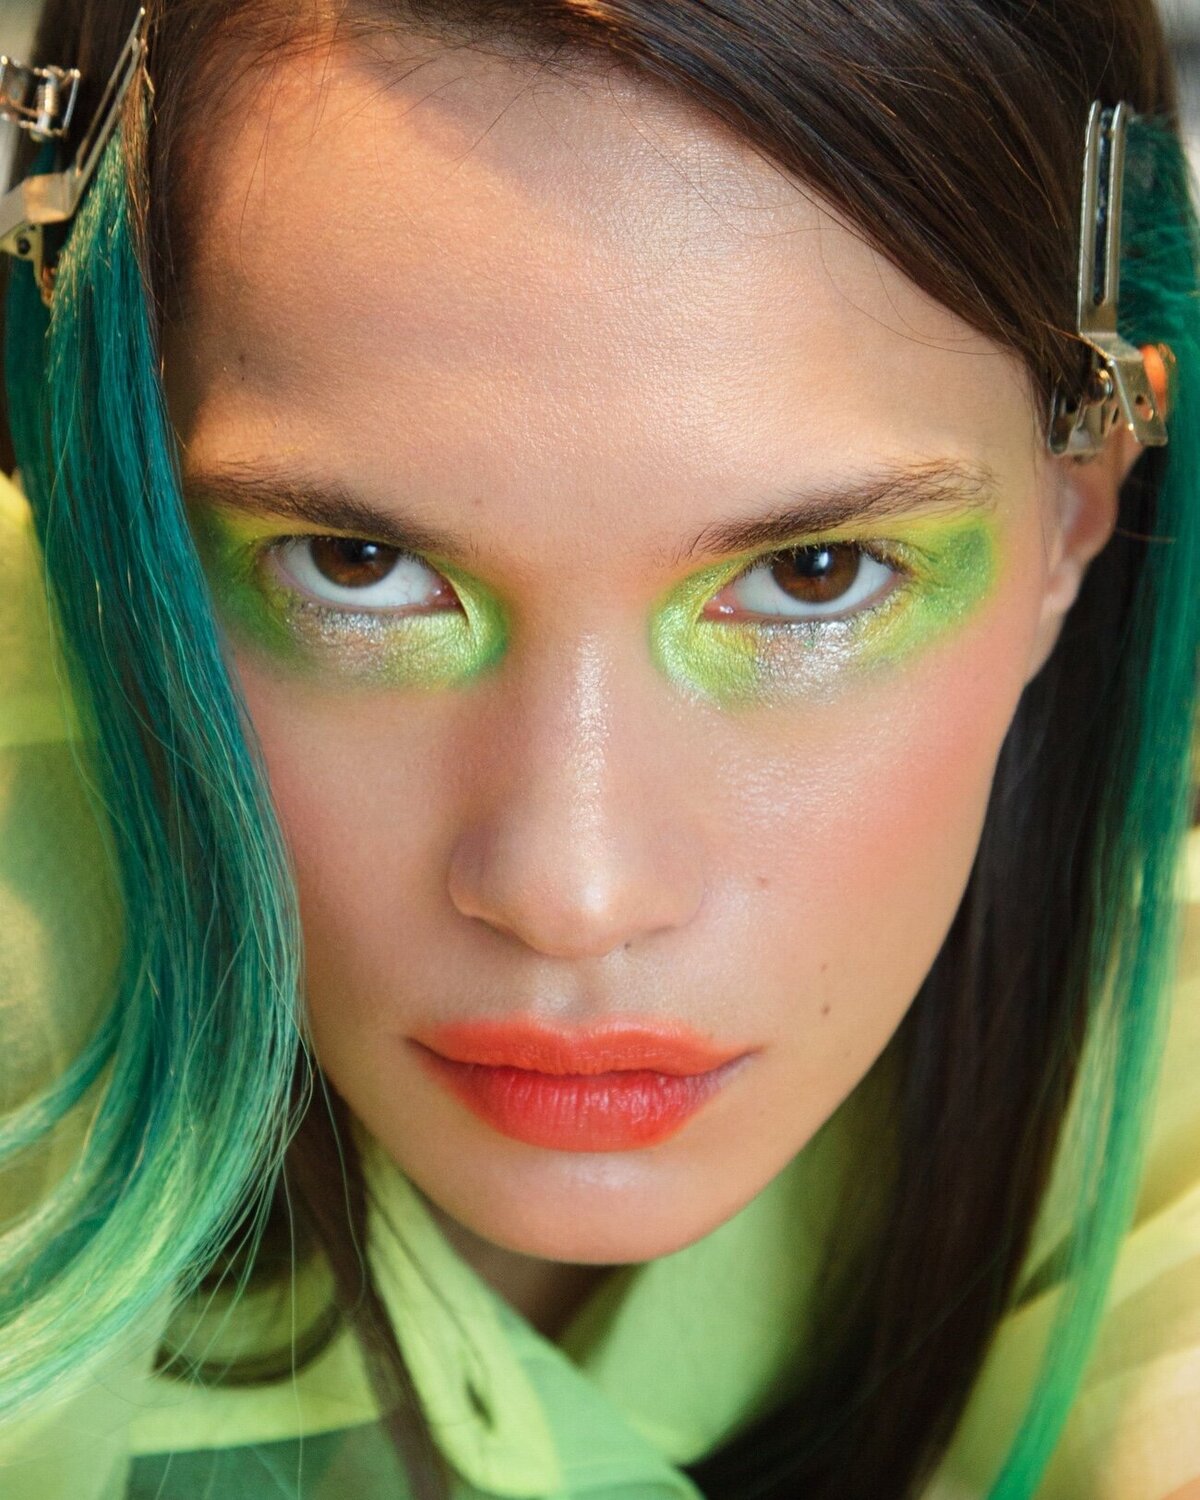 woman-editorial-shoot-green-hair-eye-makeup-peach-lips